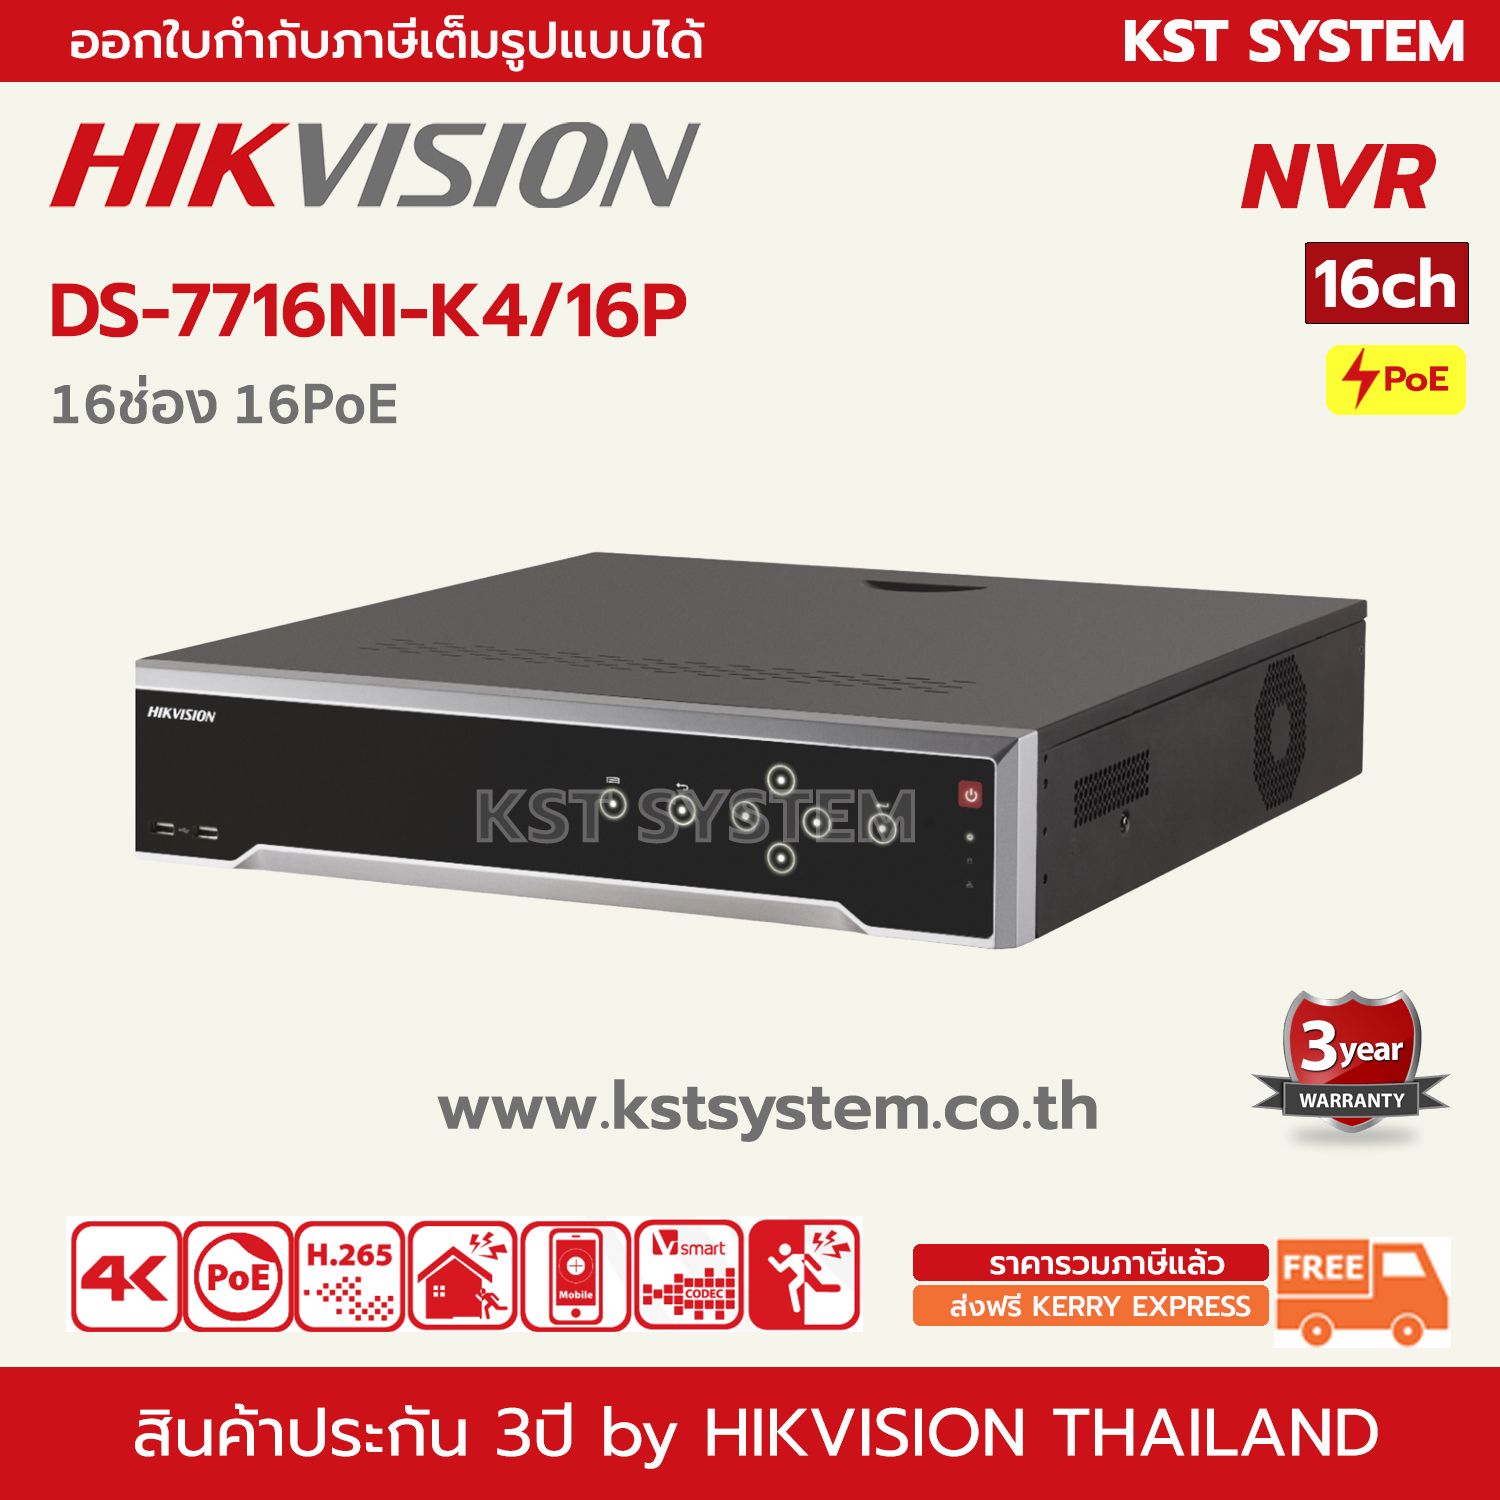 Full-4K DS-7716NI-K4/16P NVR Network Video Recorder Hikvision HIKVISION 16CH 16PoE H.265 